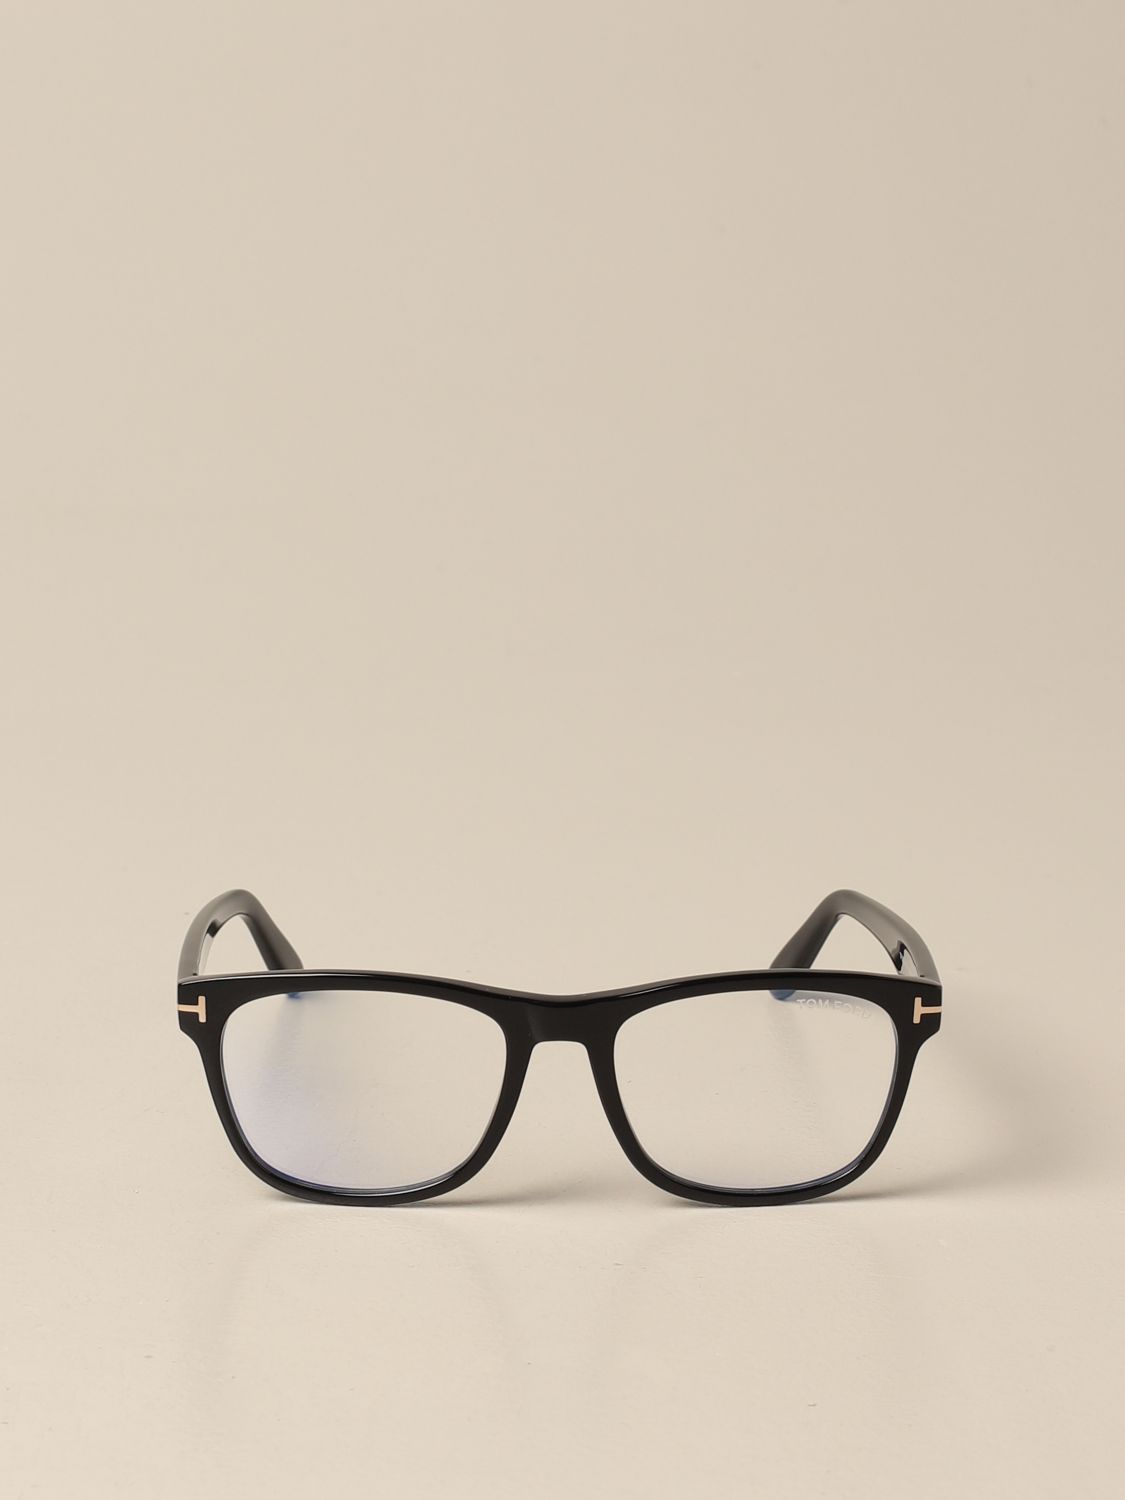 Gafas Tom Ford: Gafas mujer Tom Ford negro 2